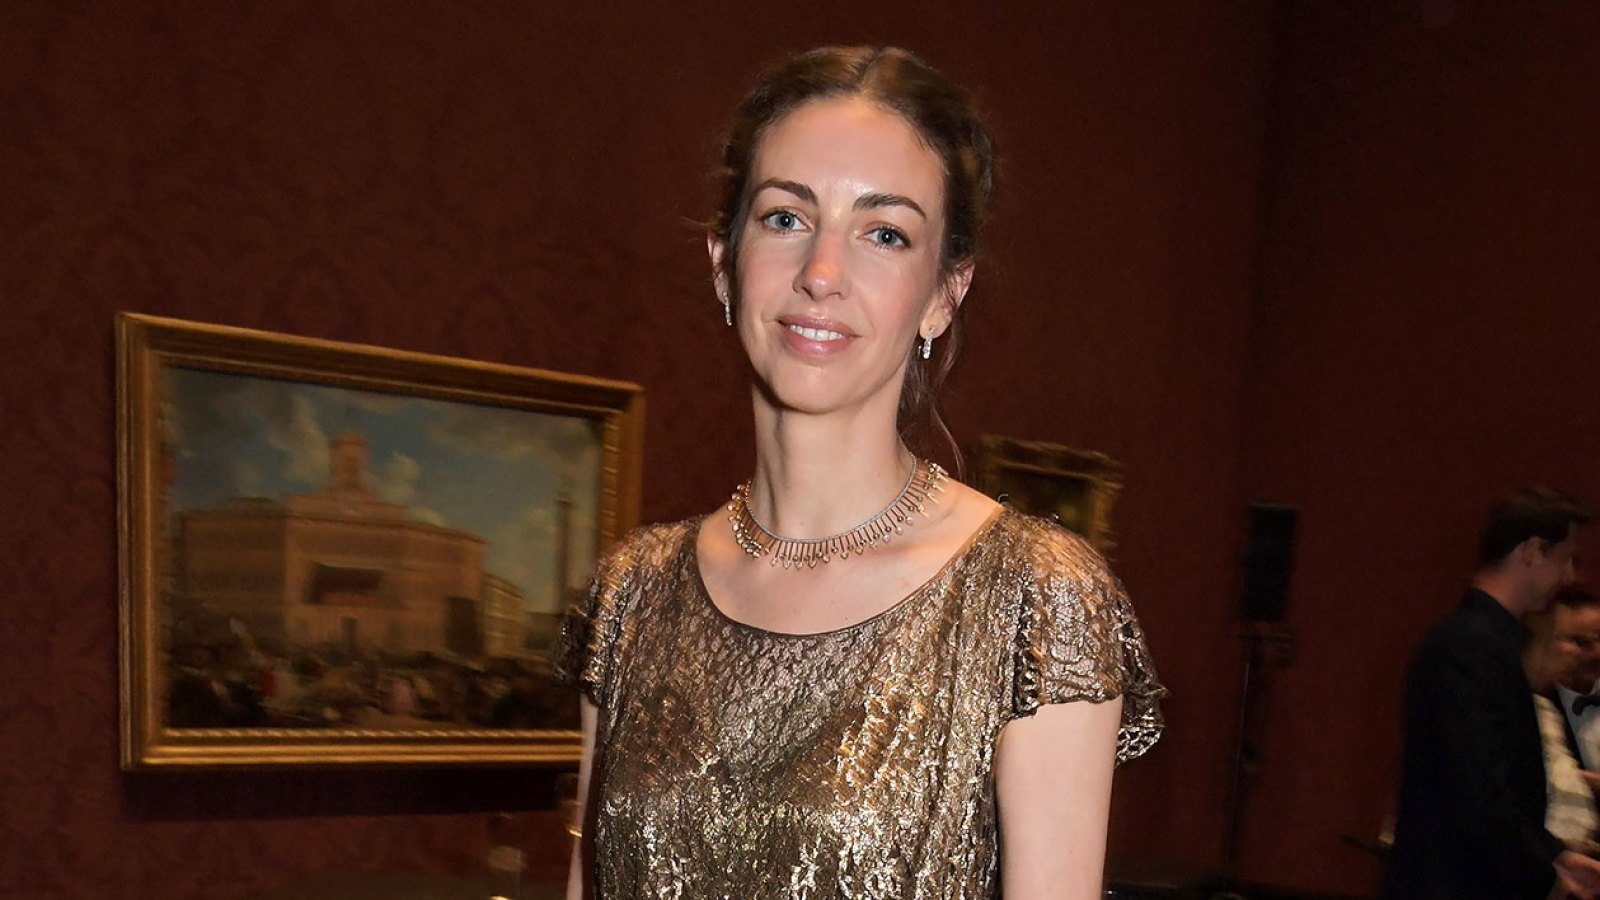 Rose Hanbury Lawyers Send Legal Notice to Stephen Colbert Over Prince William Affair Joke